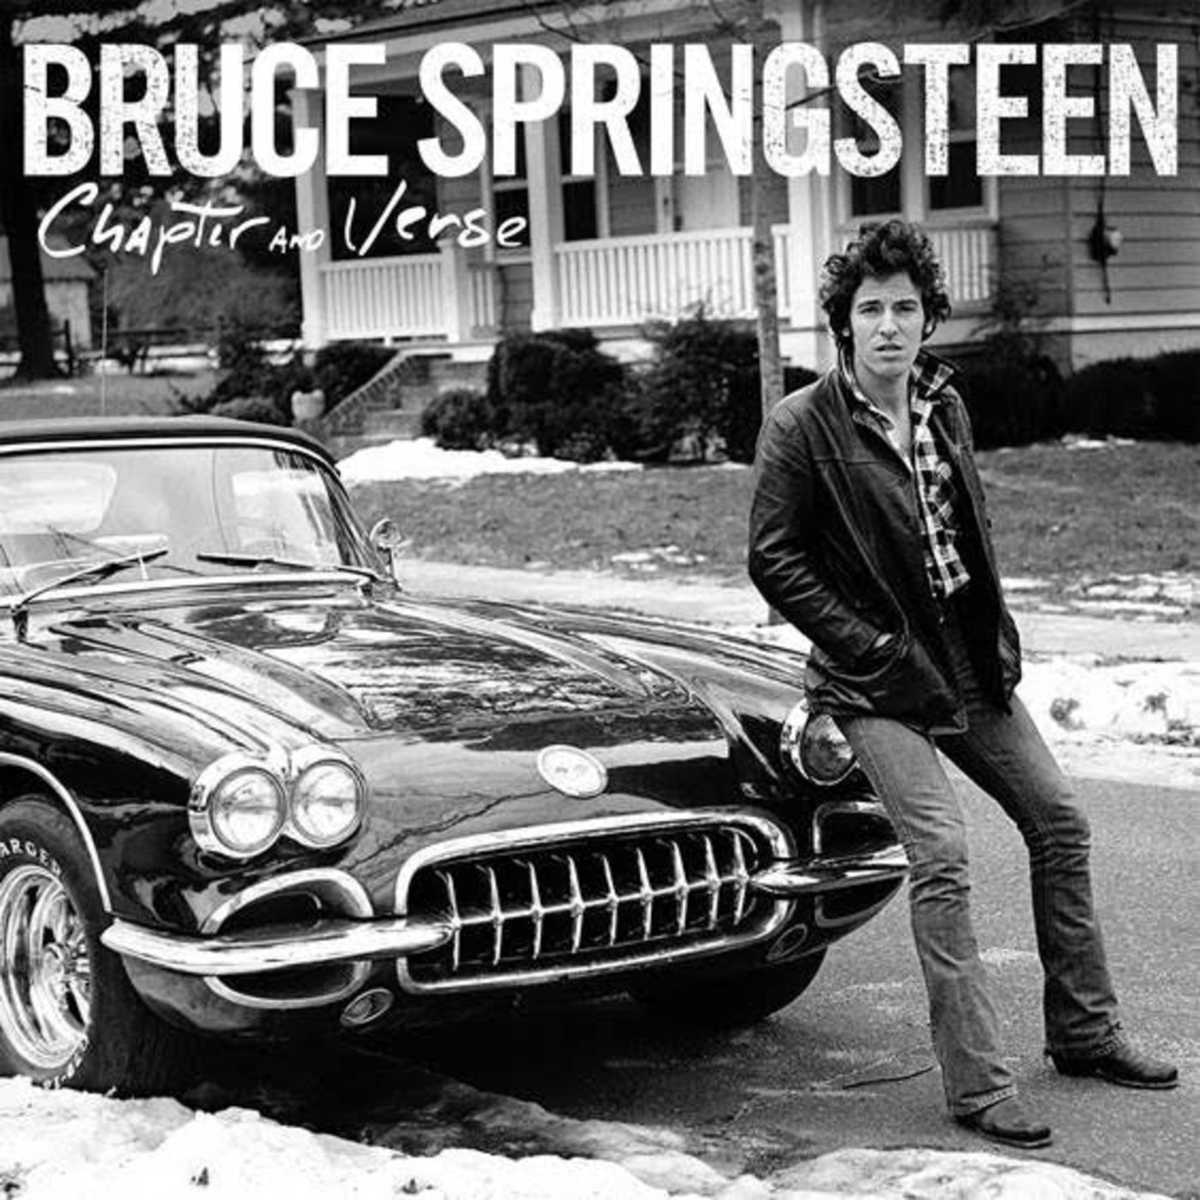 bruce-springsteen-chapter-verse-new-album